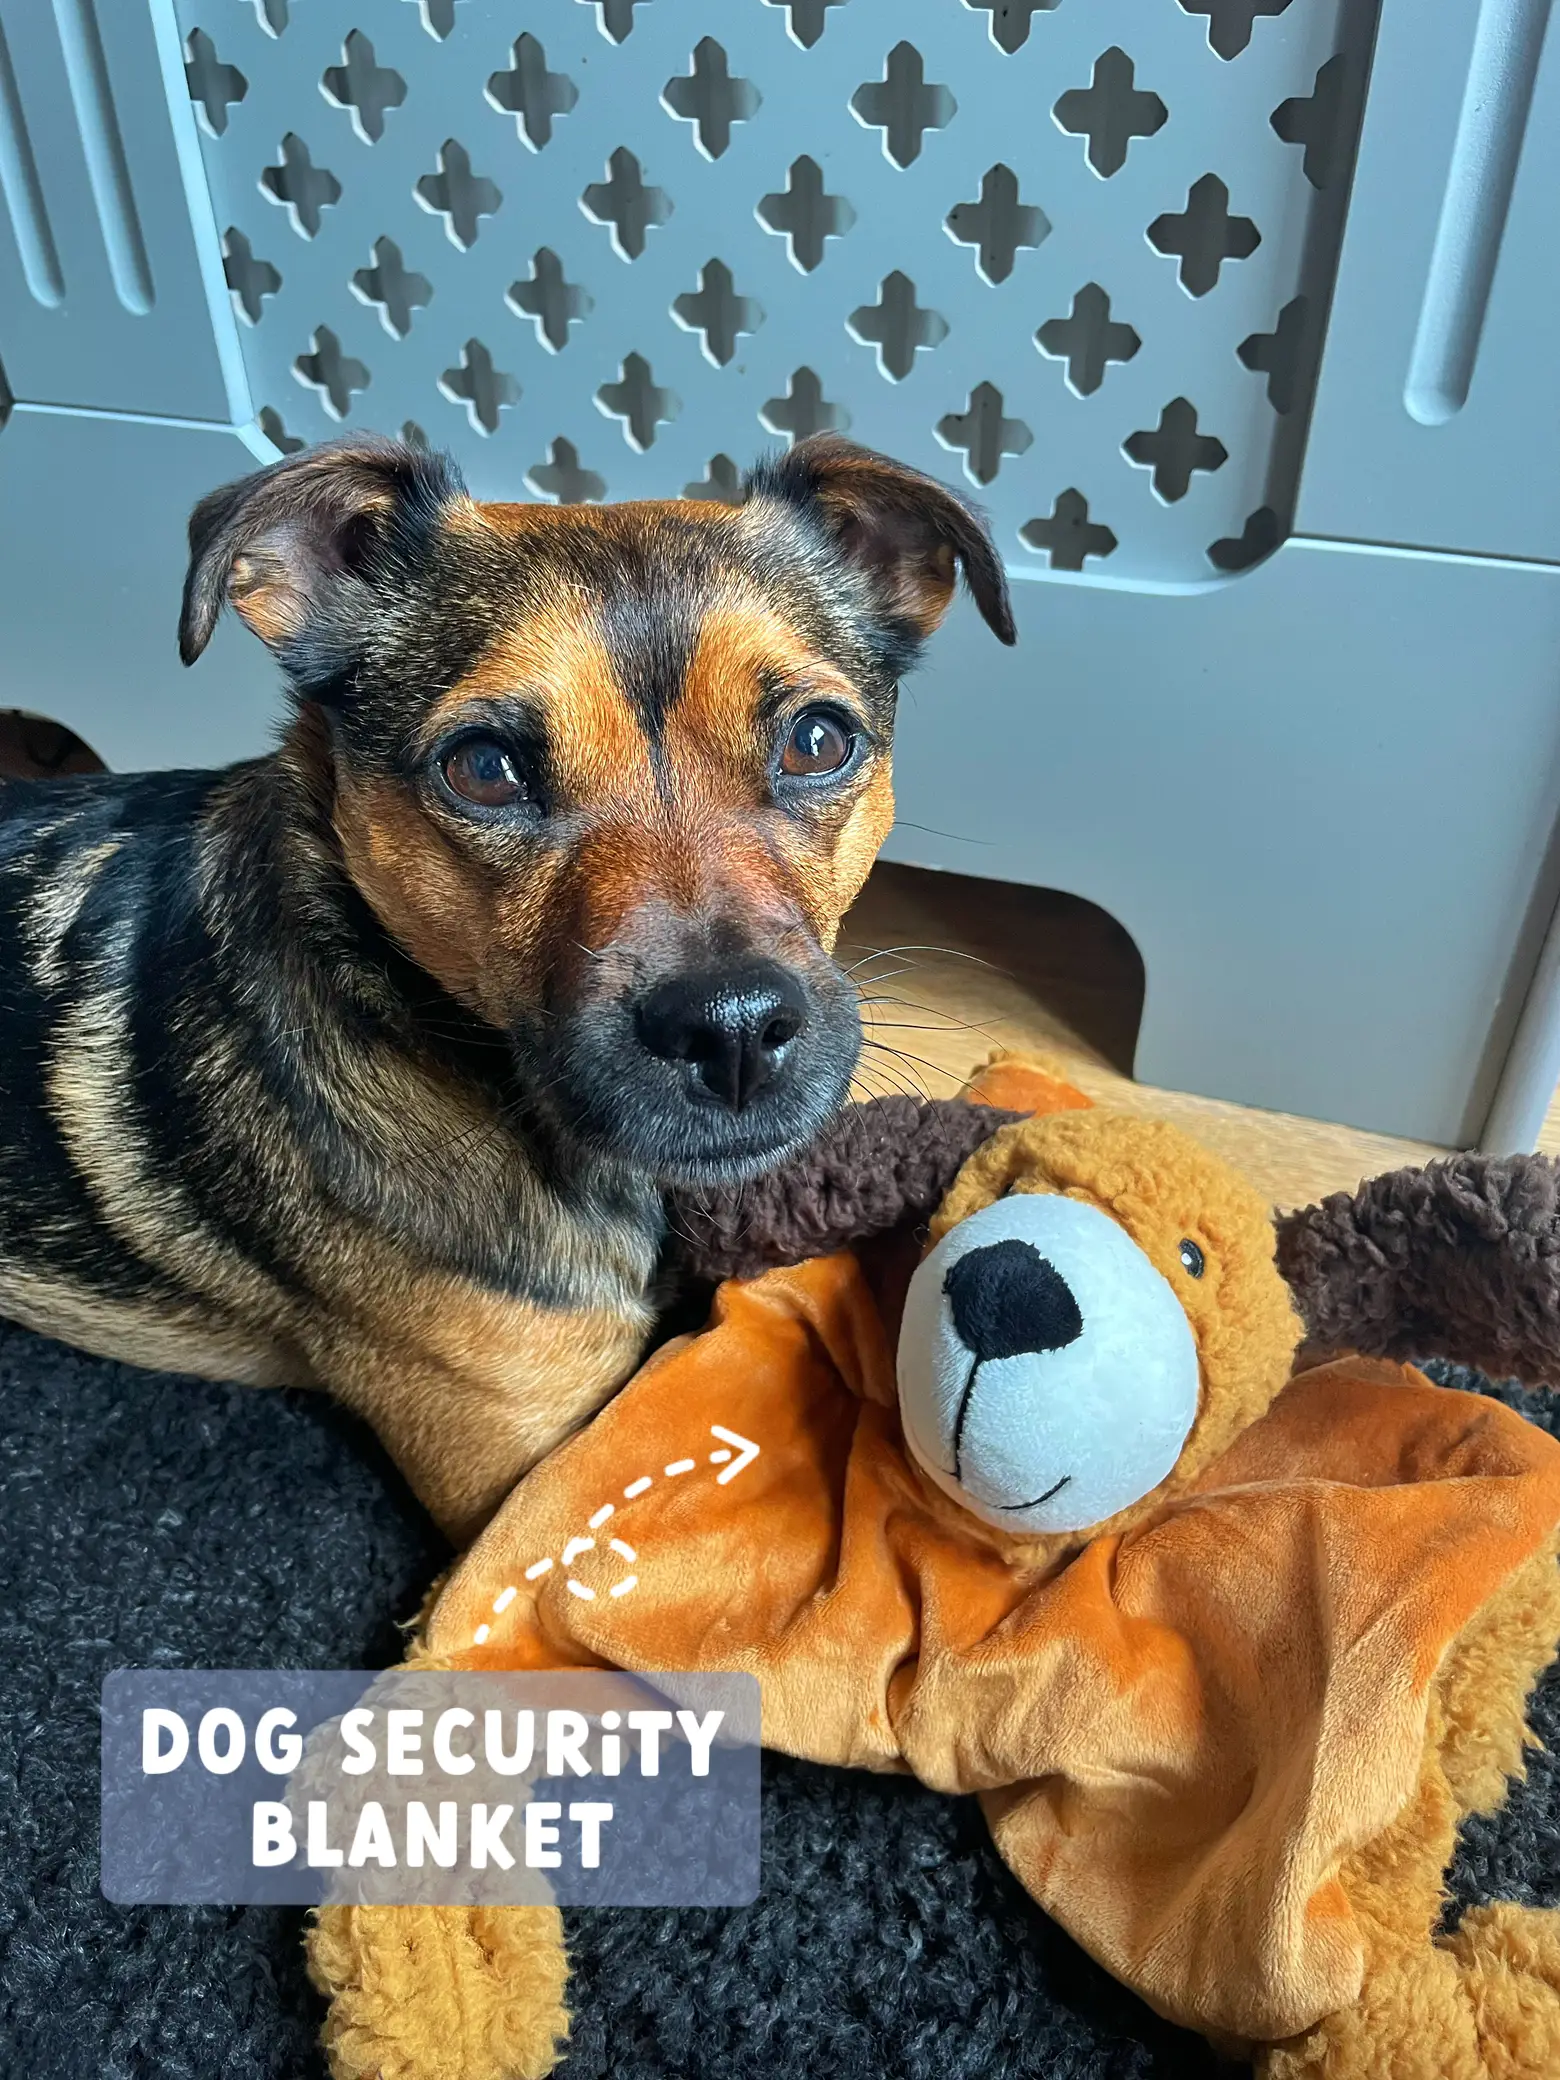 Aromadog Fleece Dog Toy Calming Pet Seperation Anxiety